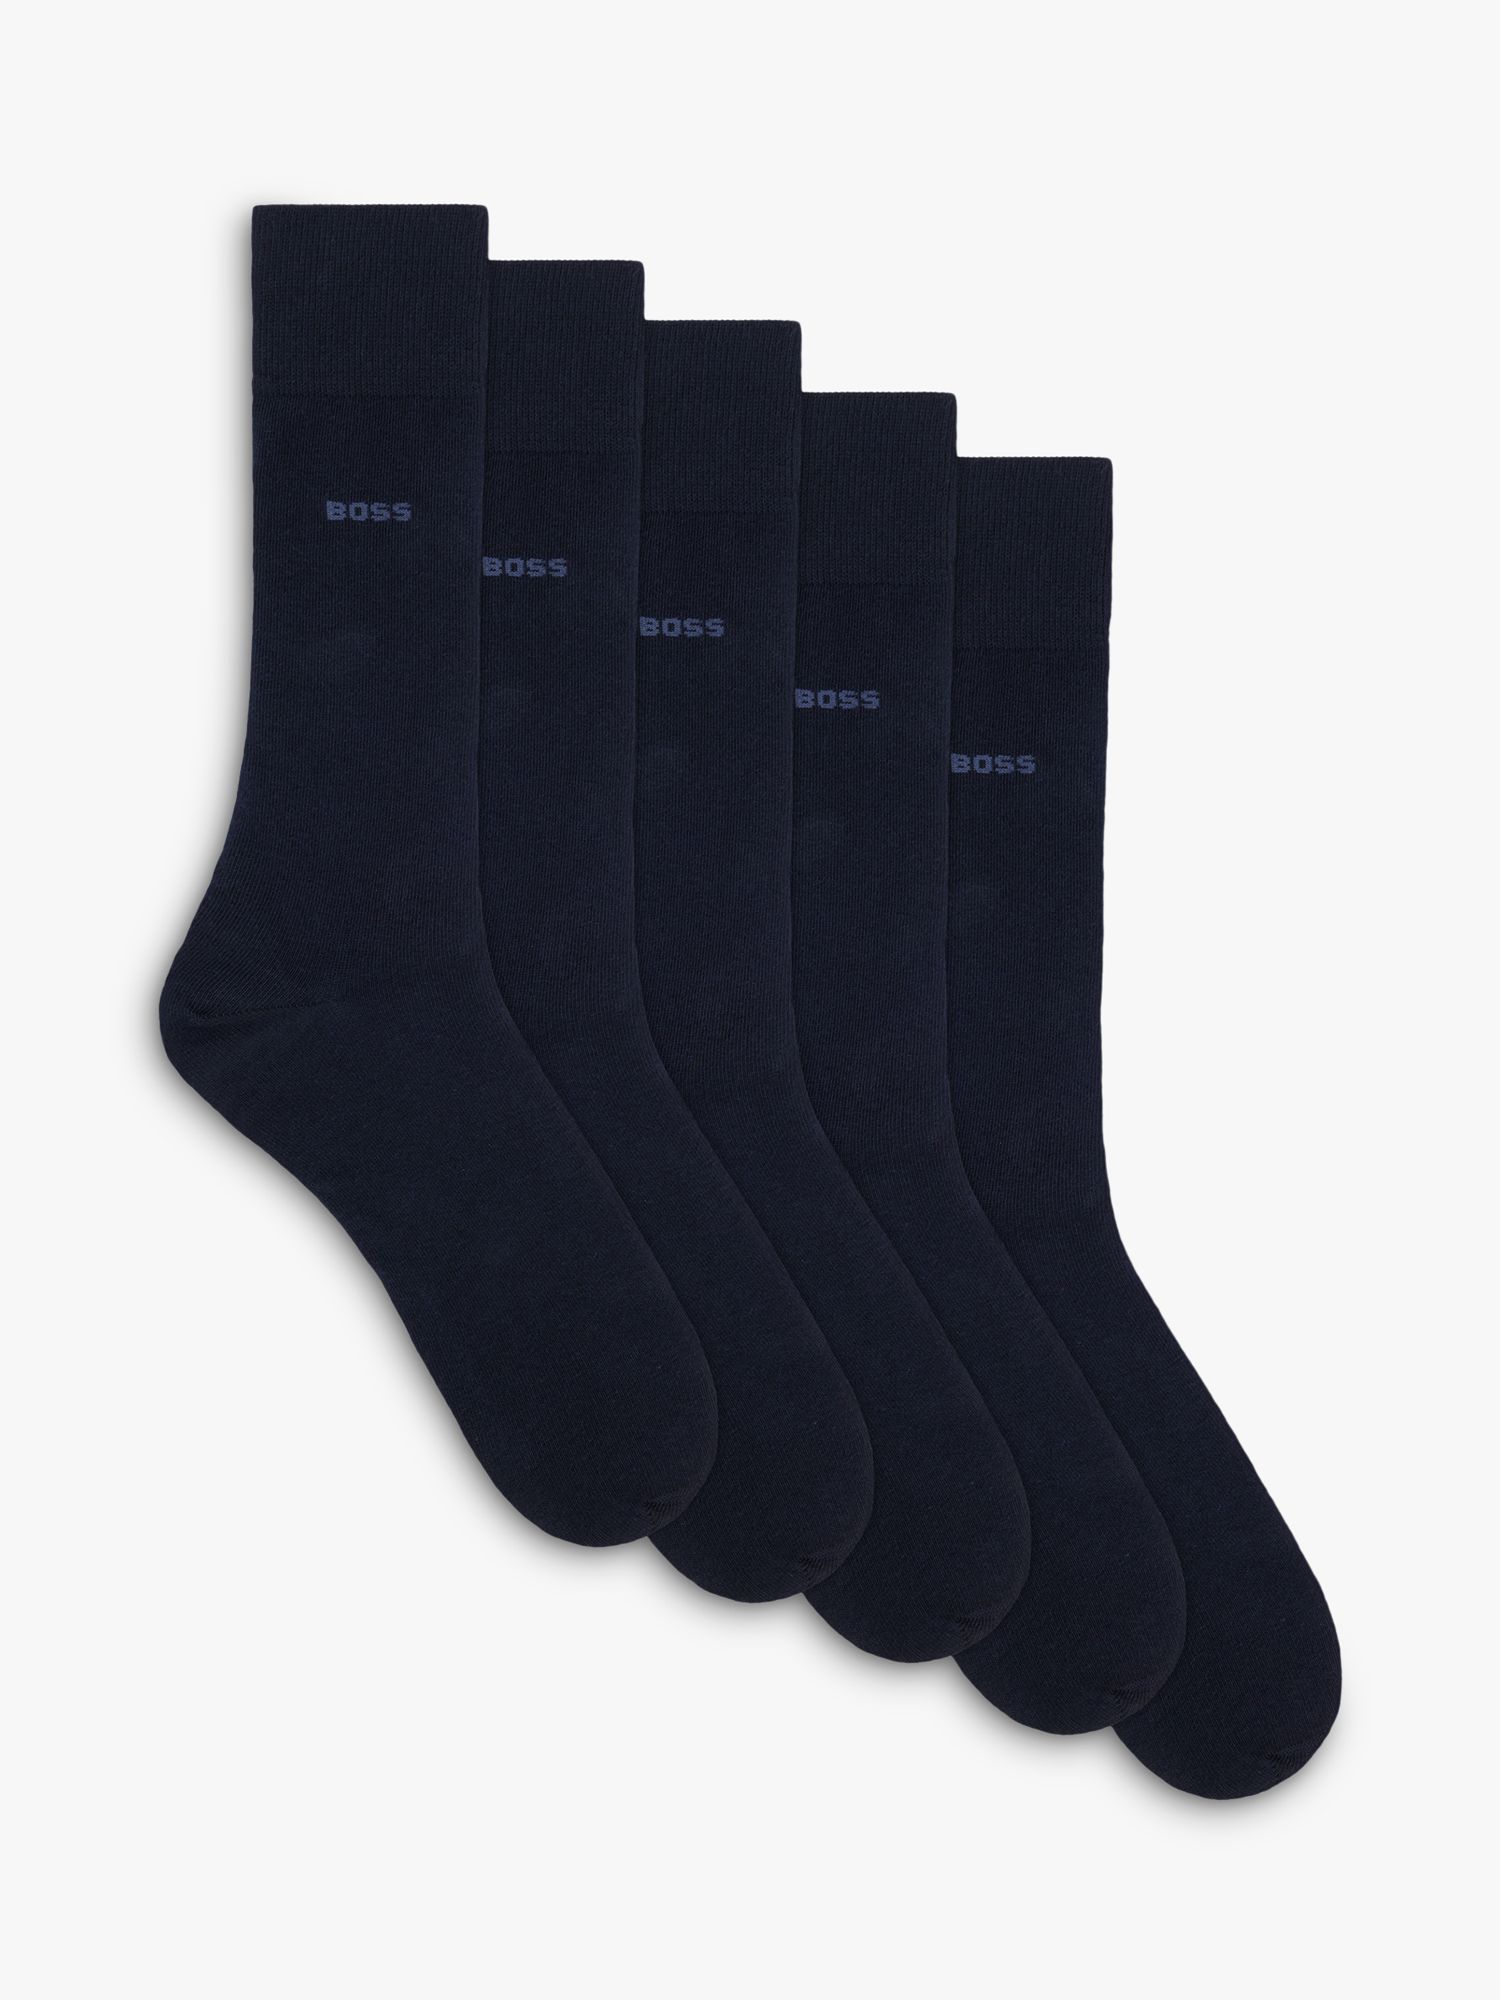 BOSS Solid Color Socks, Pack of 5, Dark Blue at John Lewis & Partners